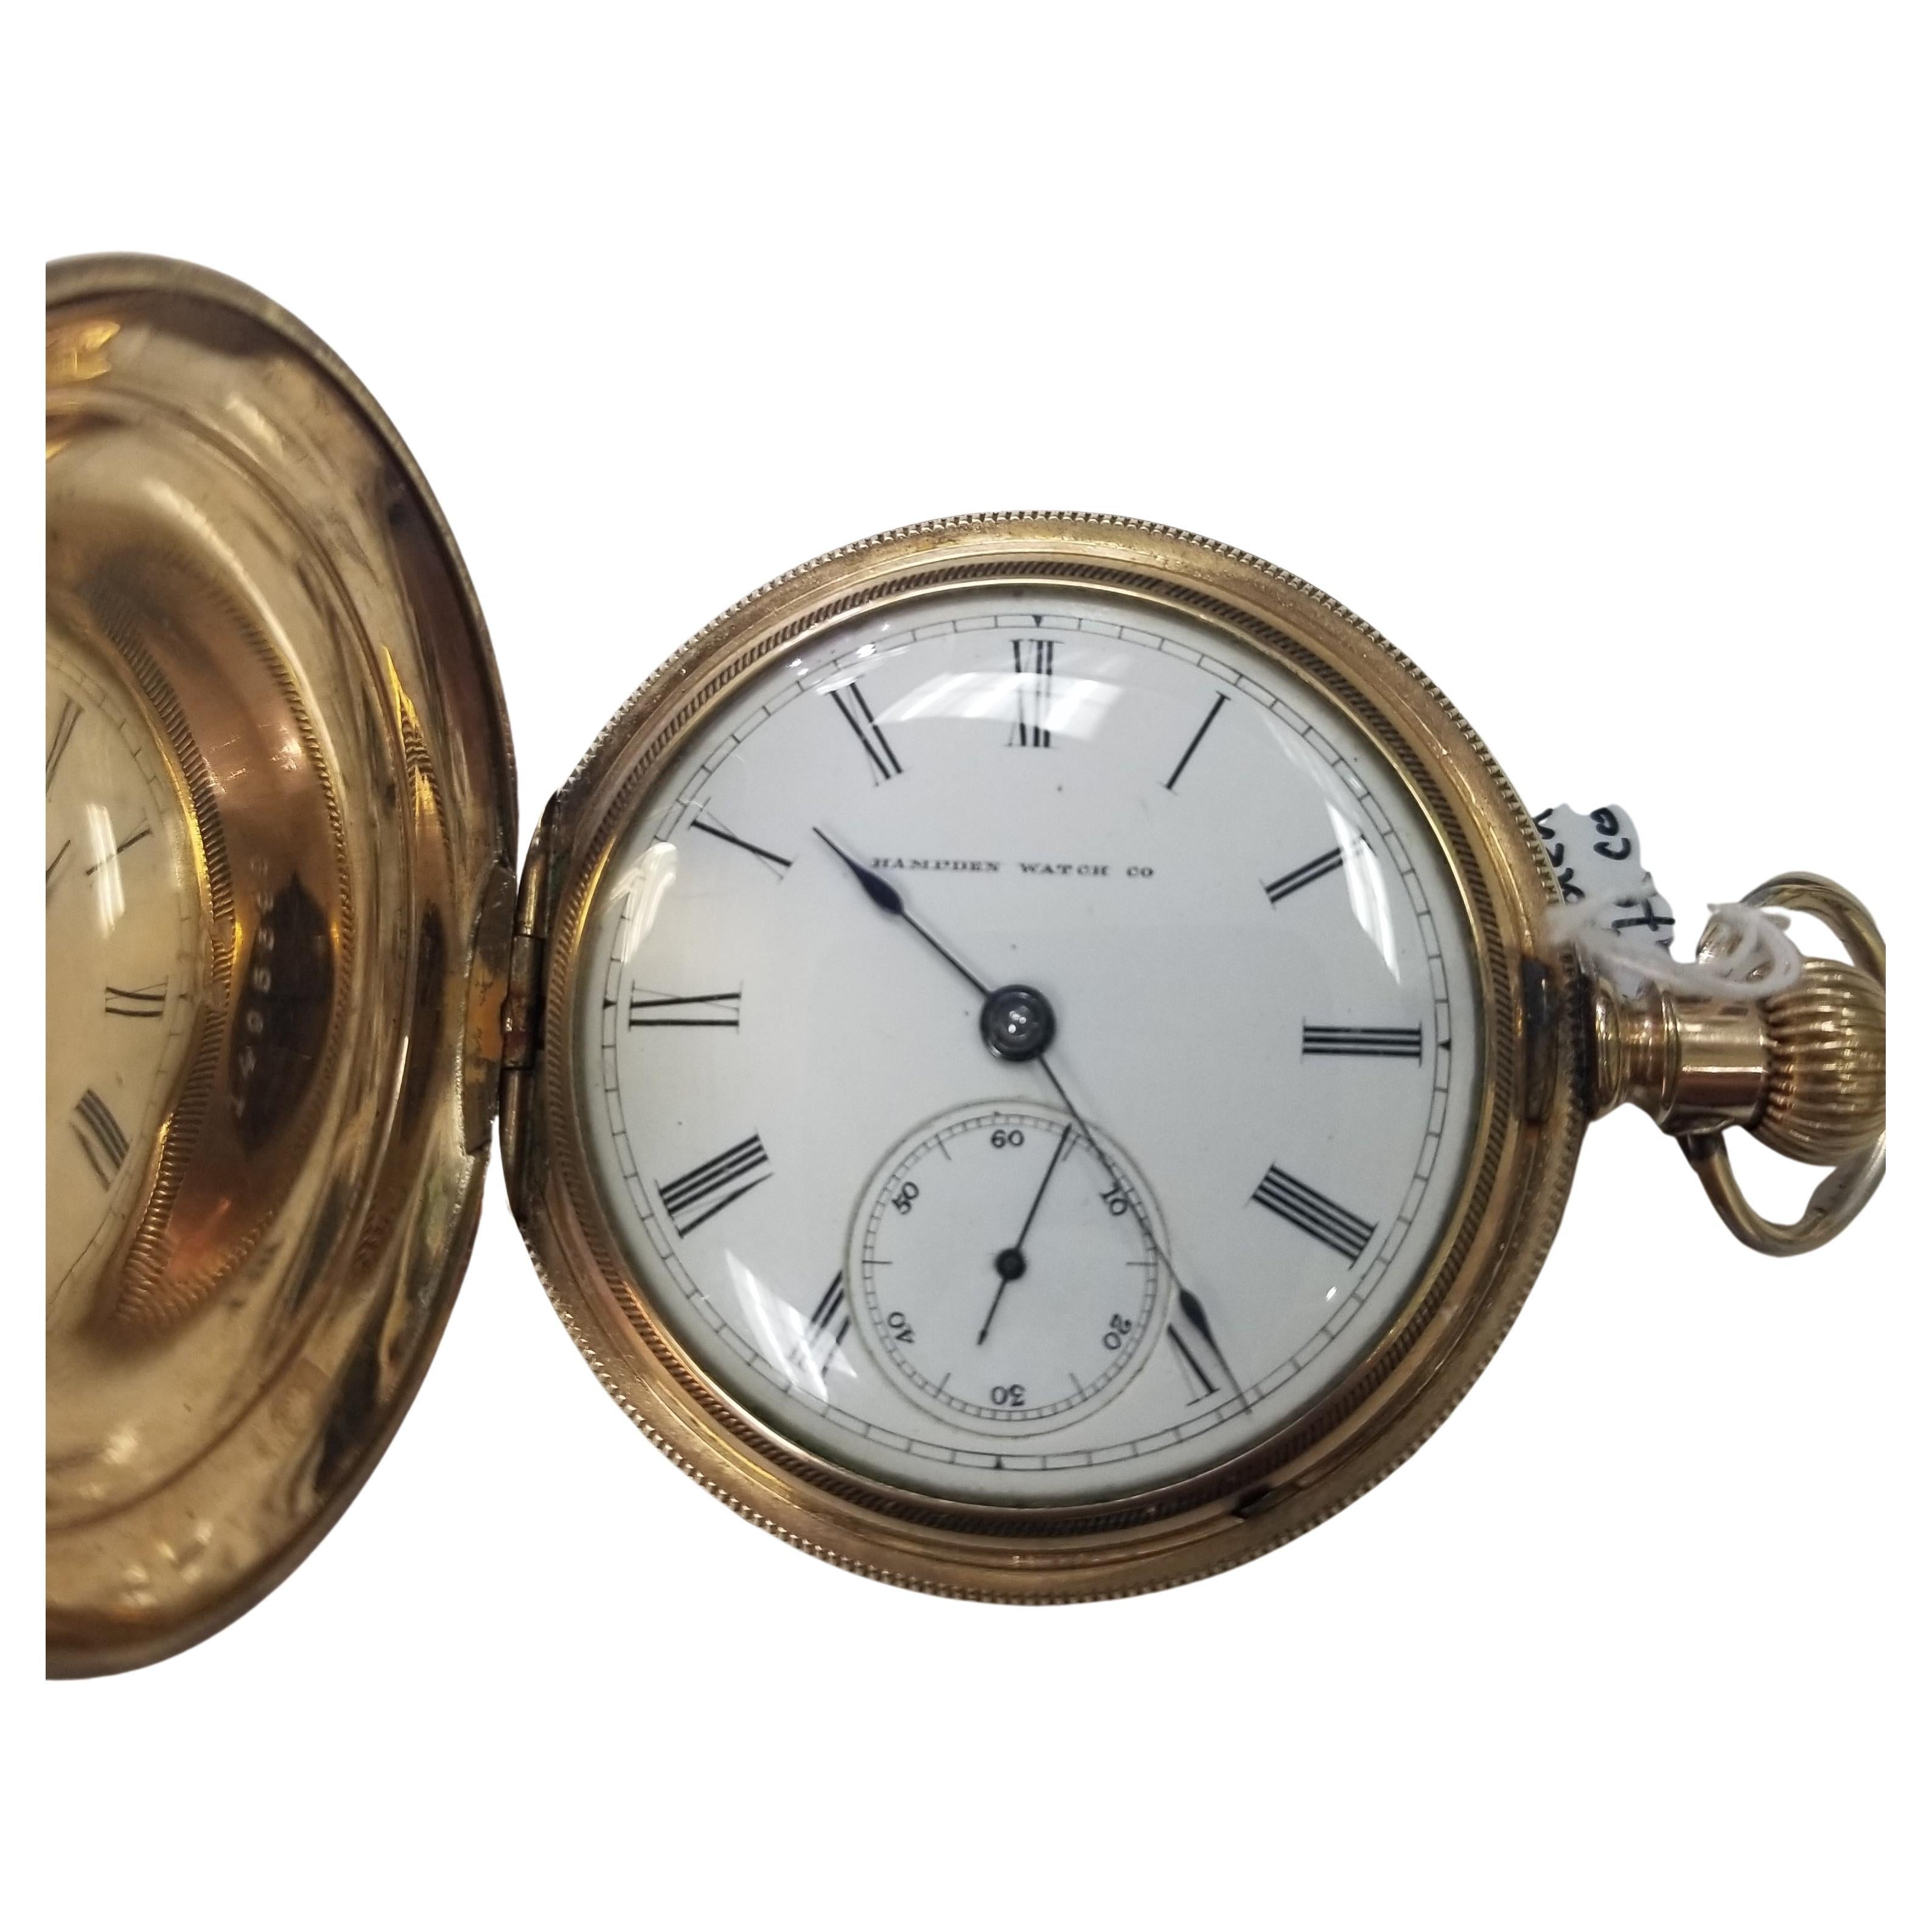 Hampden Watch Co. Cadran blanc plaqué or 1900-1909